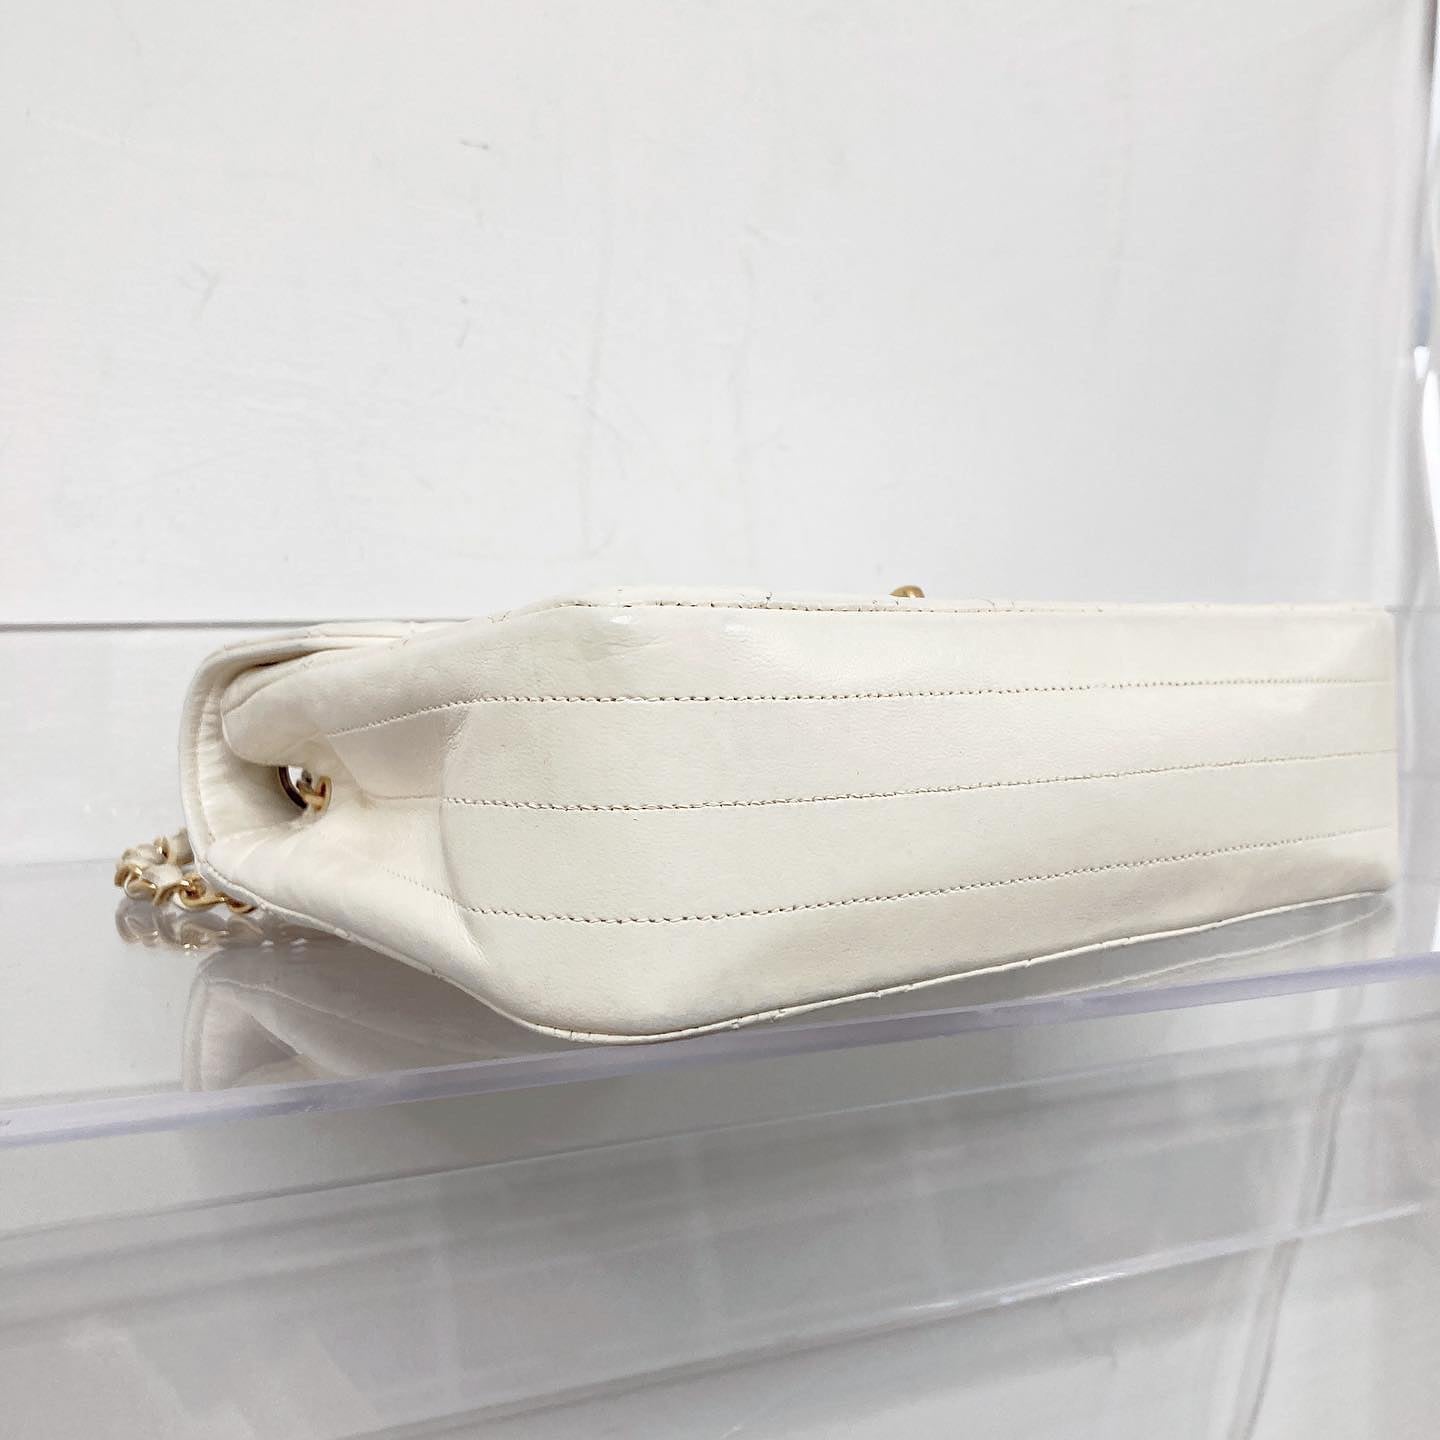 Chanel White 22cm 大全套 有卡 有貼 有塵袋 有盒